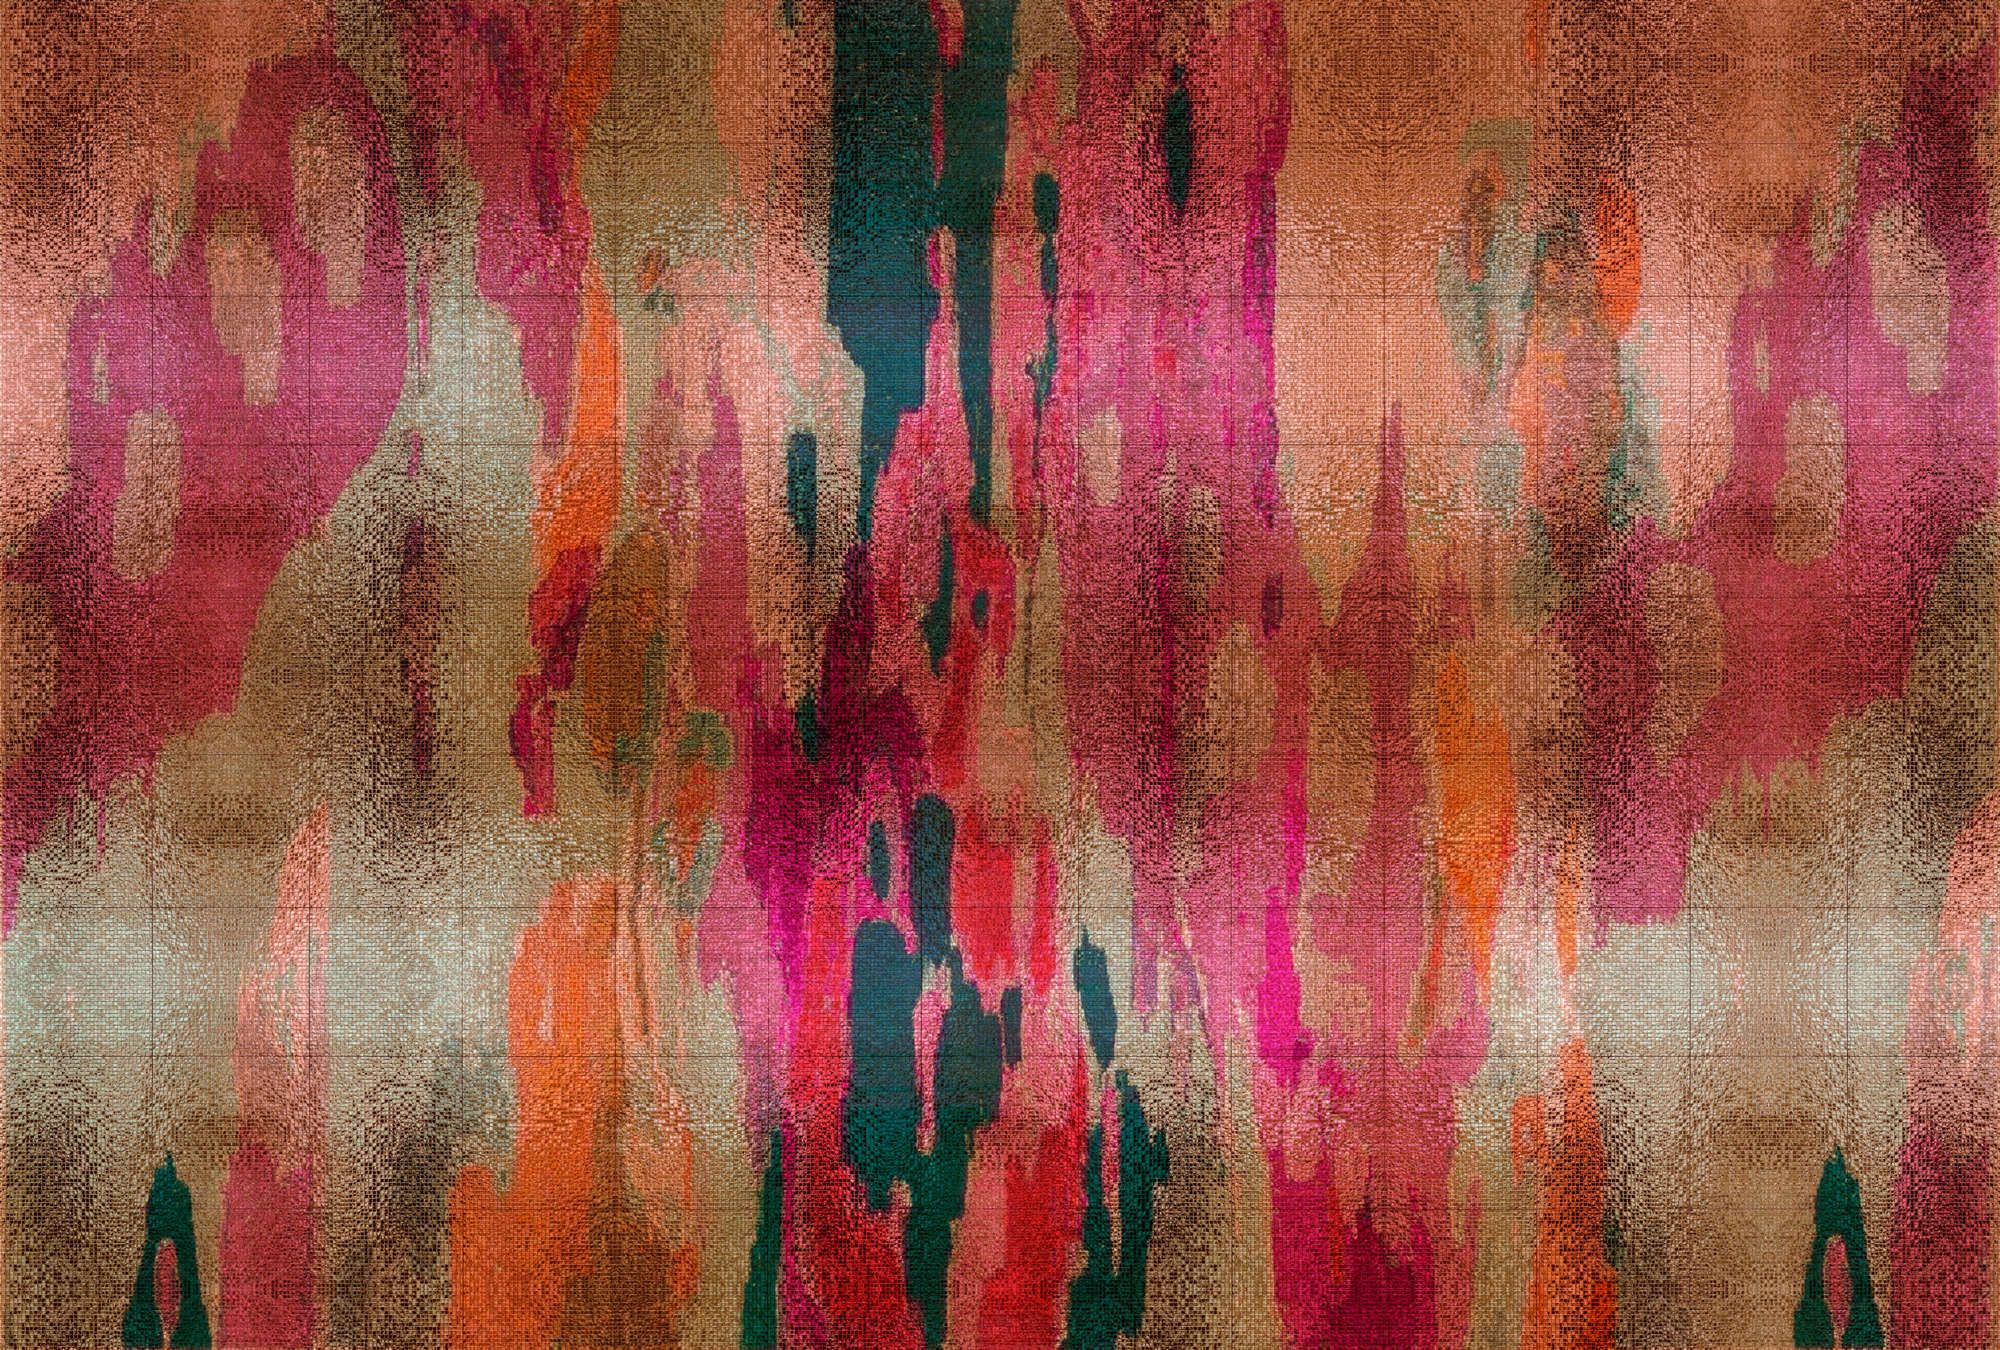             Fotomurali »marielle 2« - sfumature di colore viola, arancio, petrolio con struttura a mosaico - tessuto non tessuto opaco e liscio
        